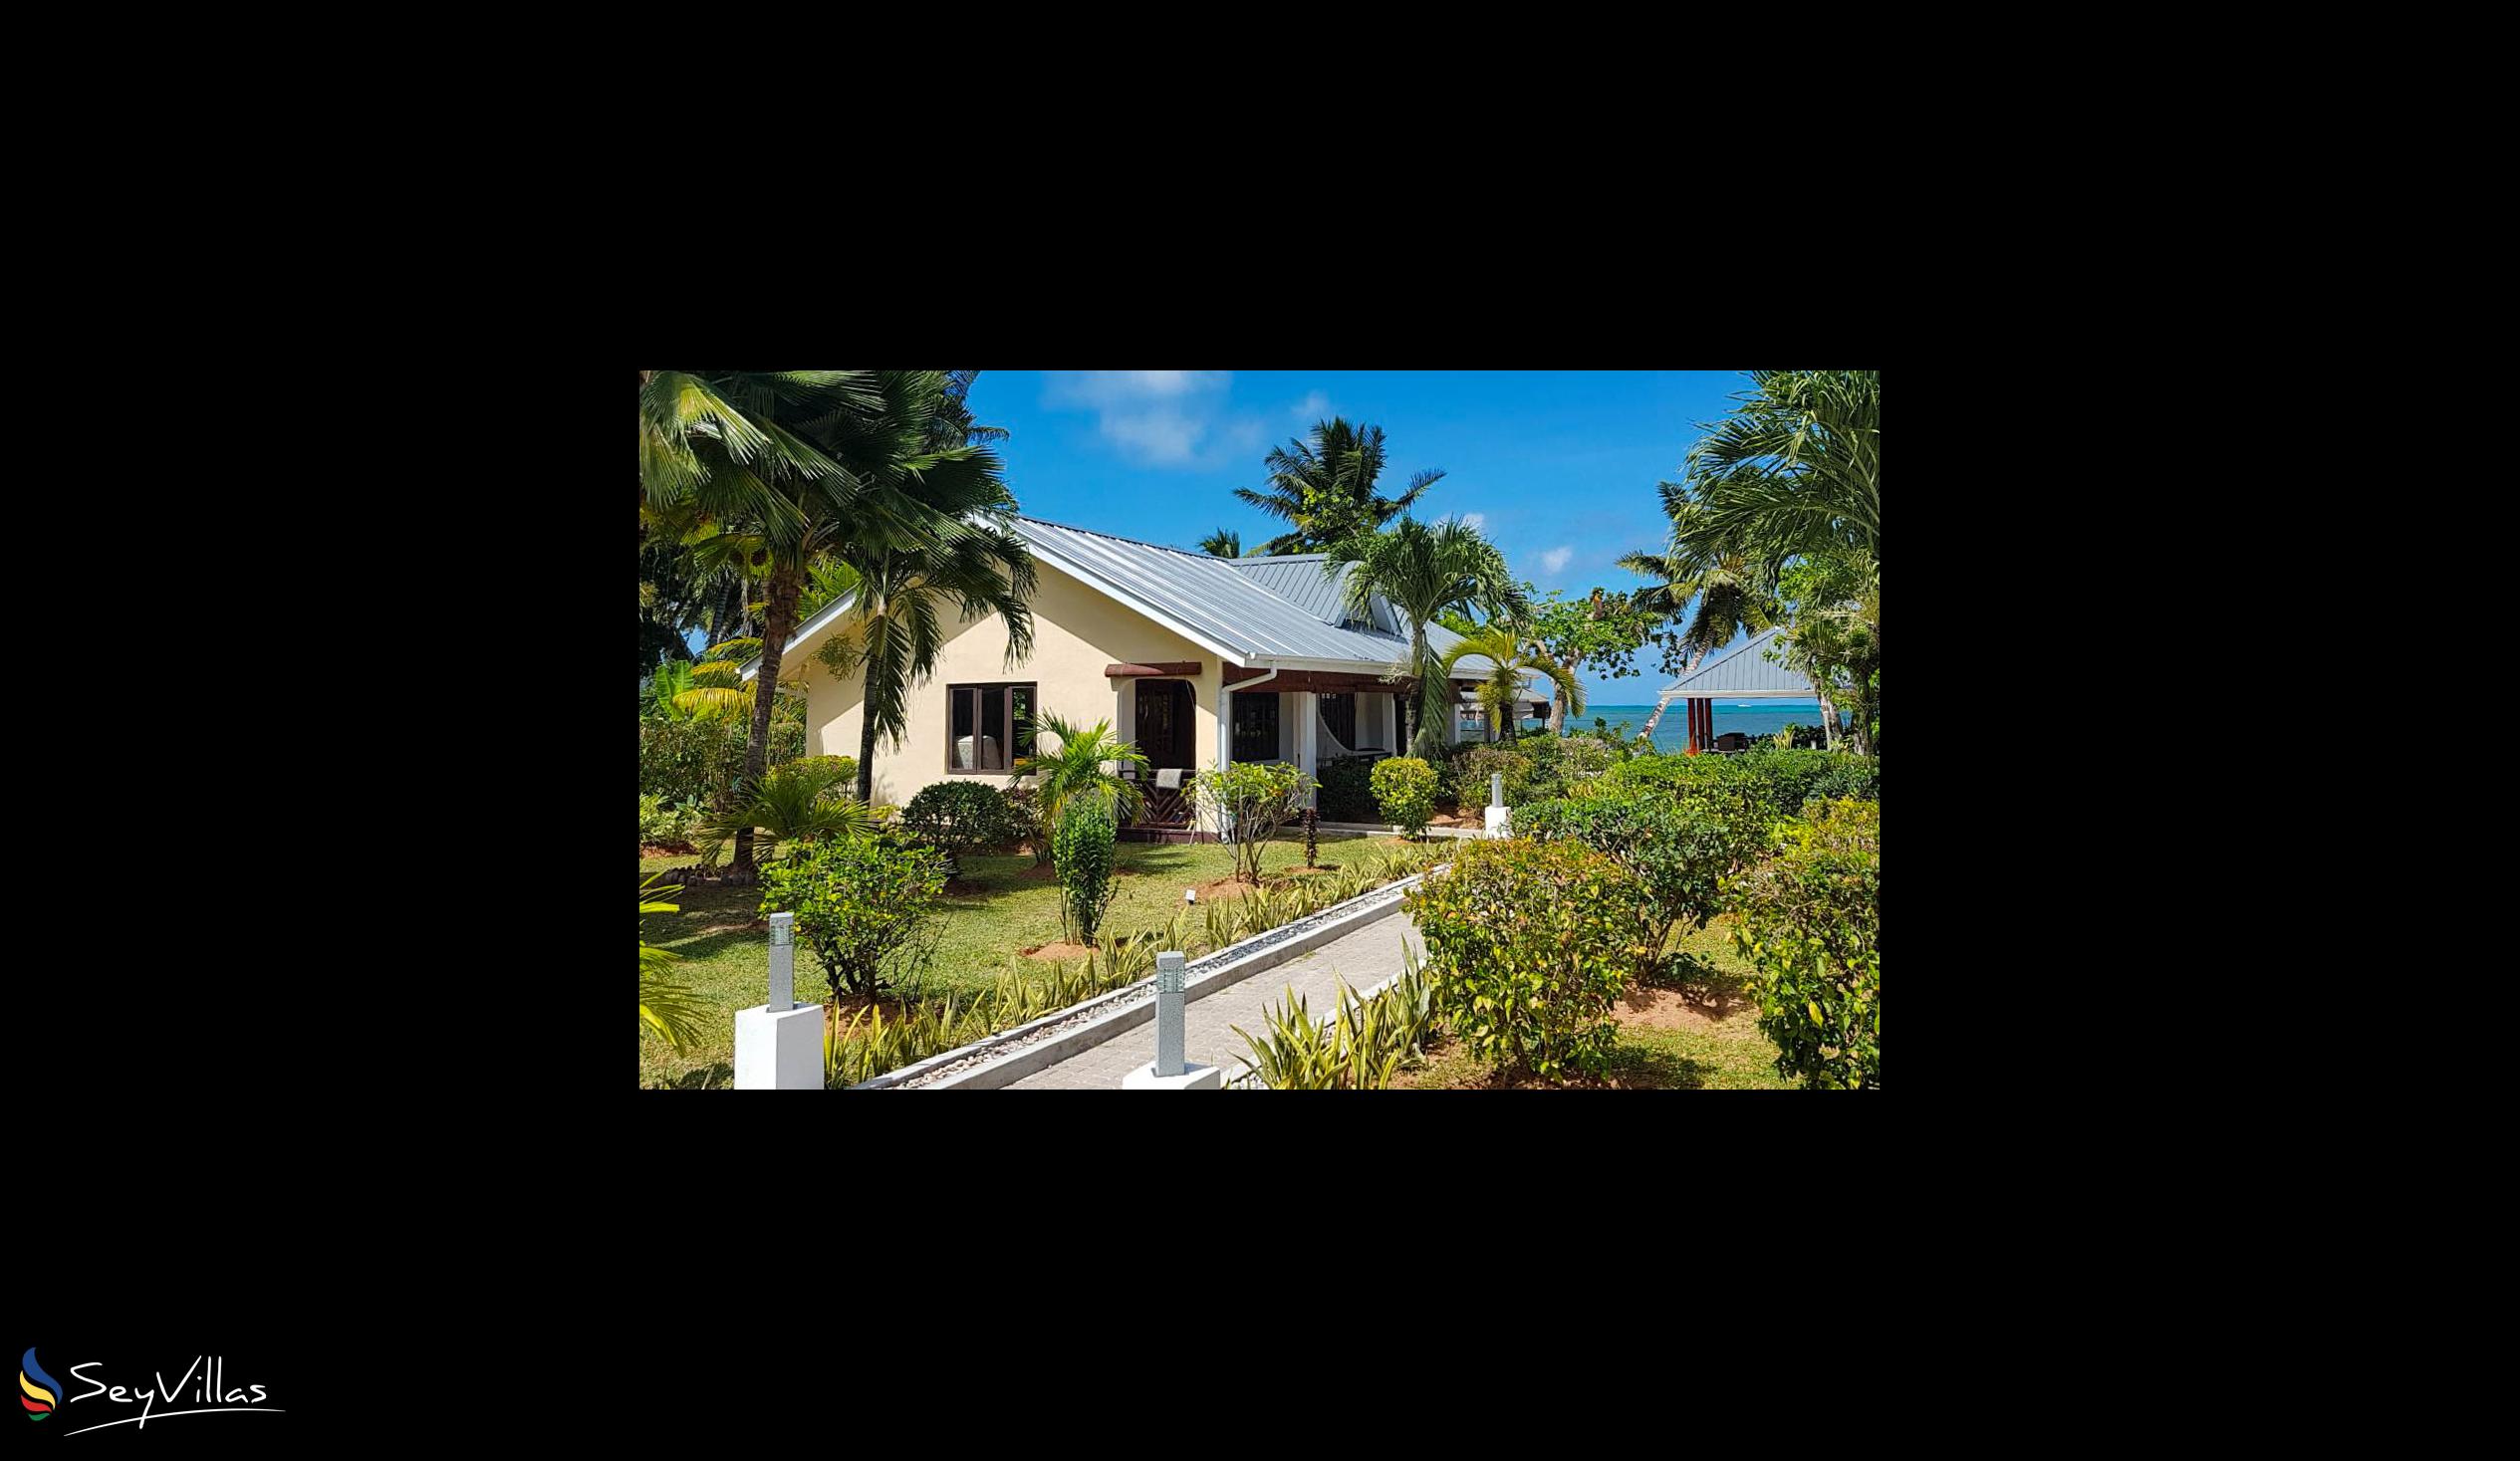 Foto 4: Villas de Mer - Aussenbereich - Praslin (Seychellen)